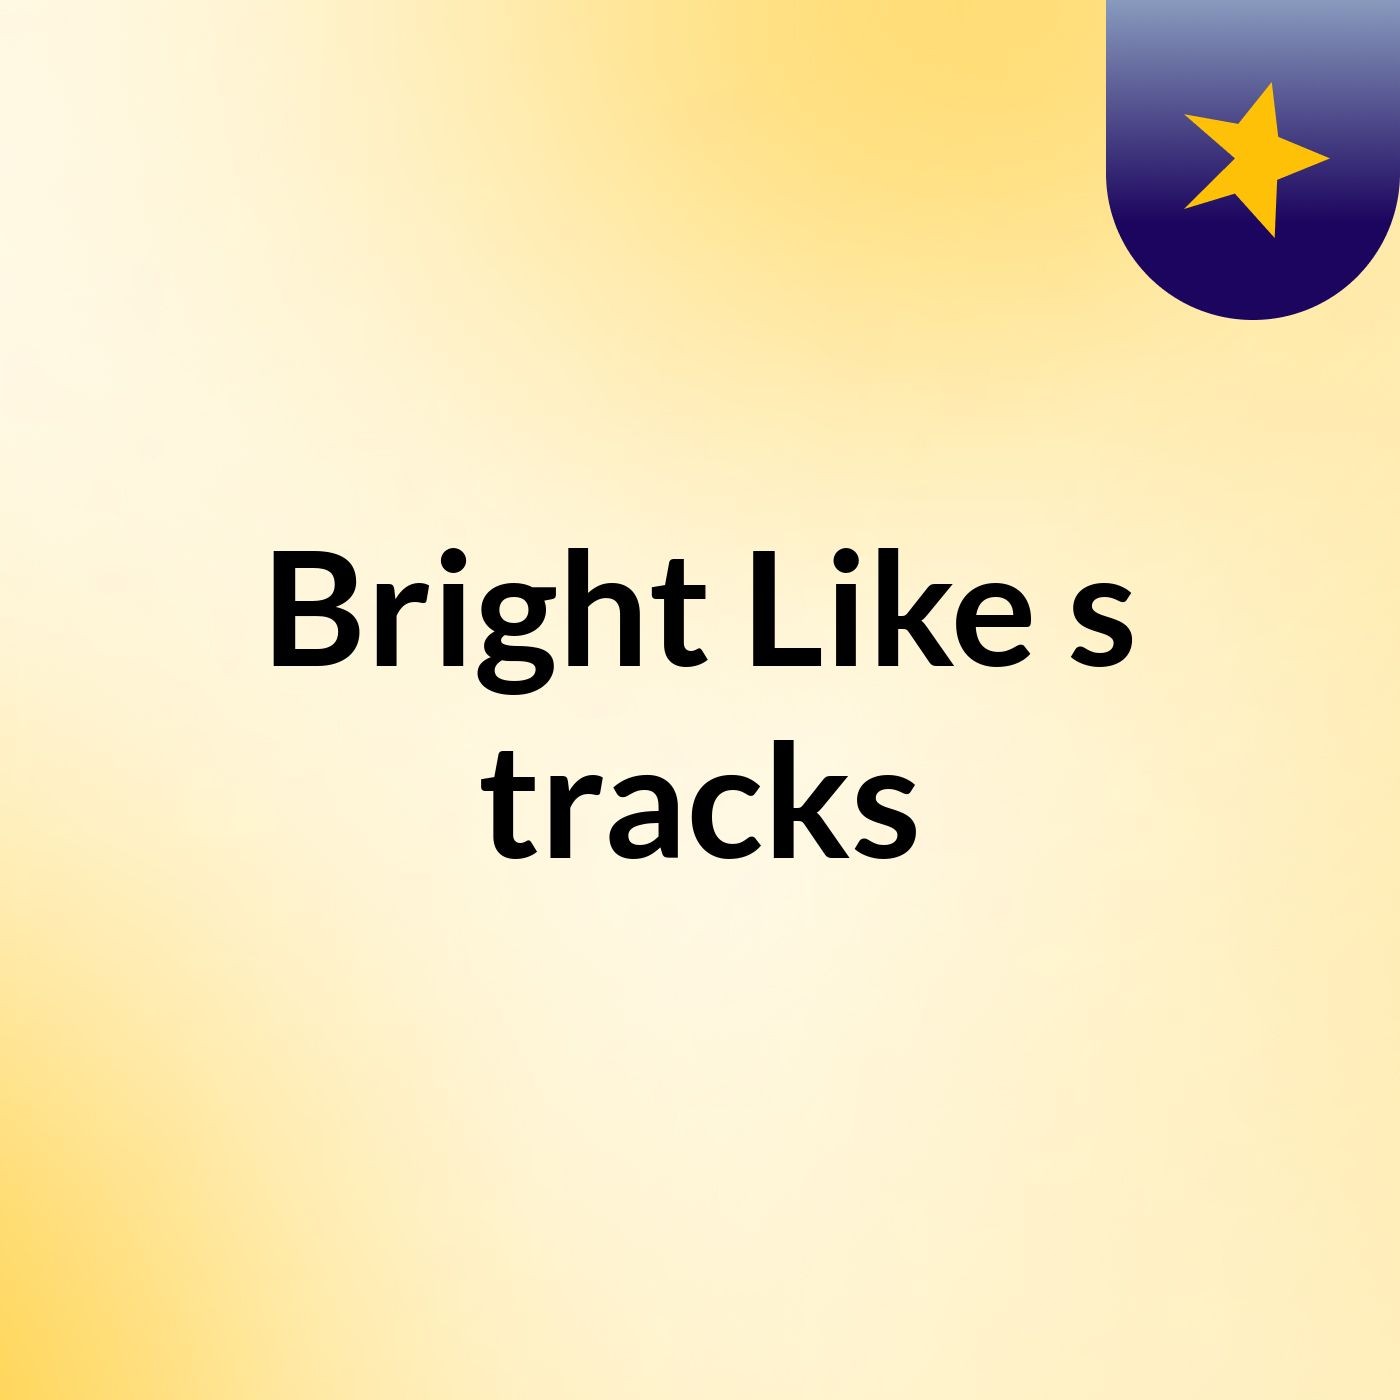 Bright Like's tracks